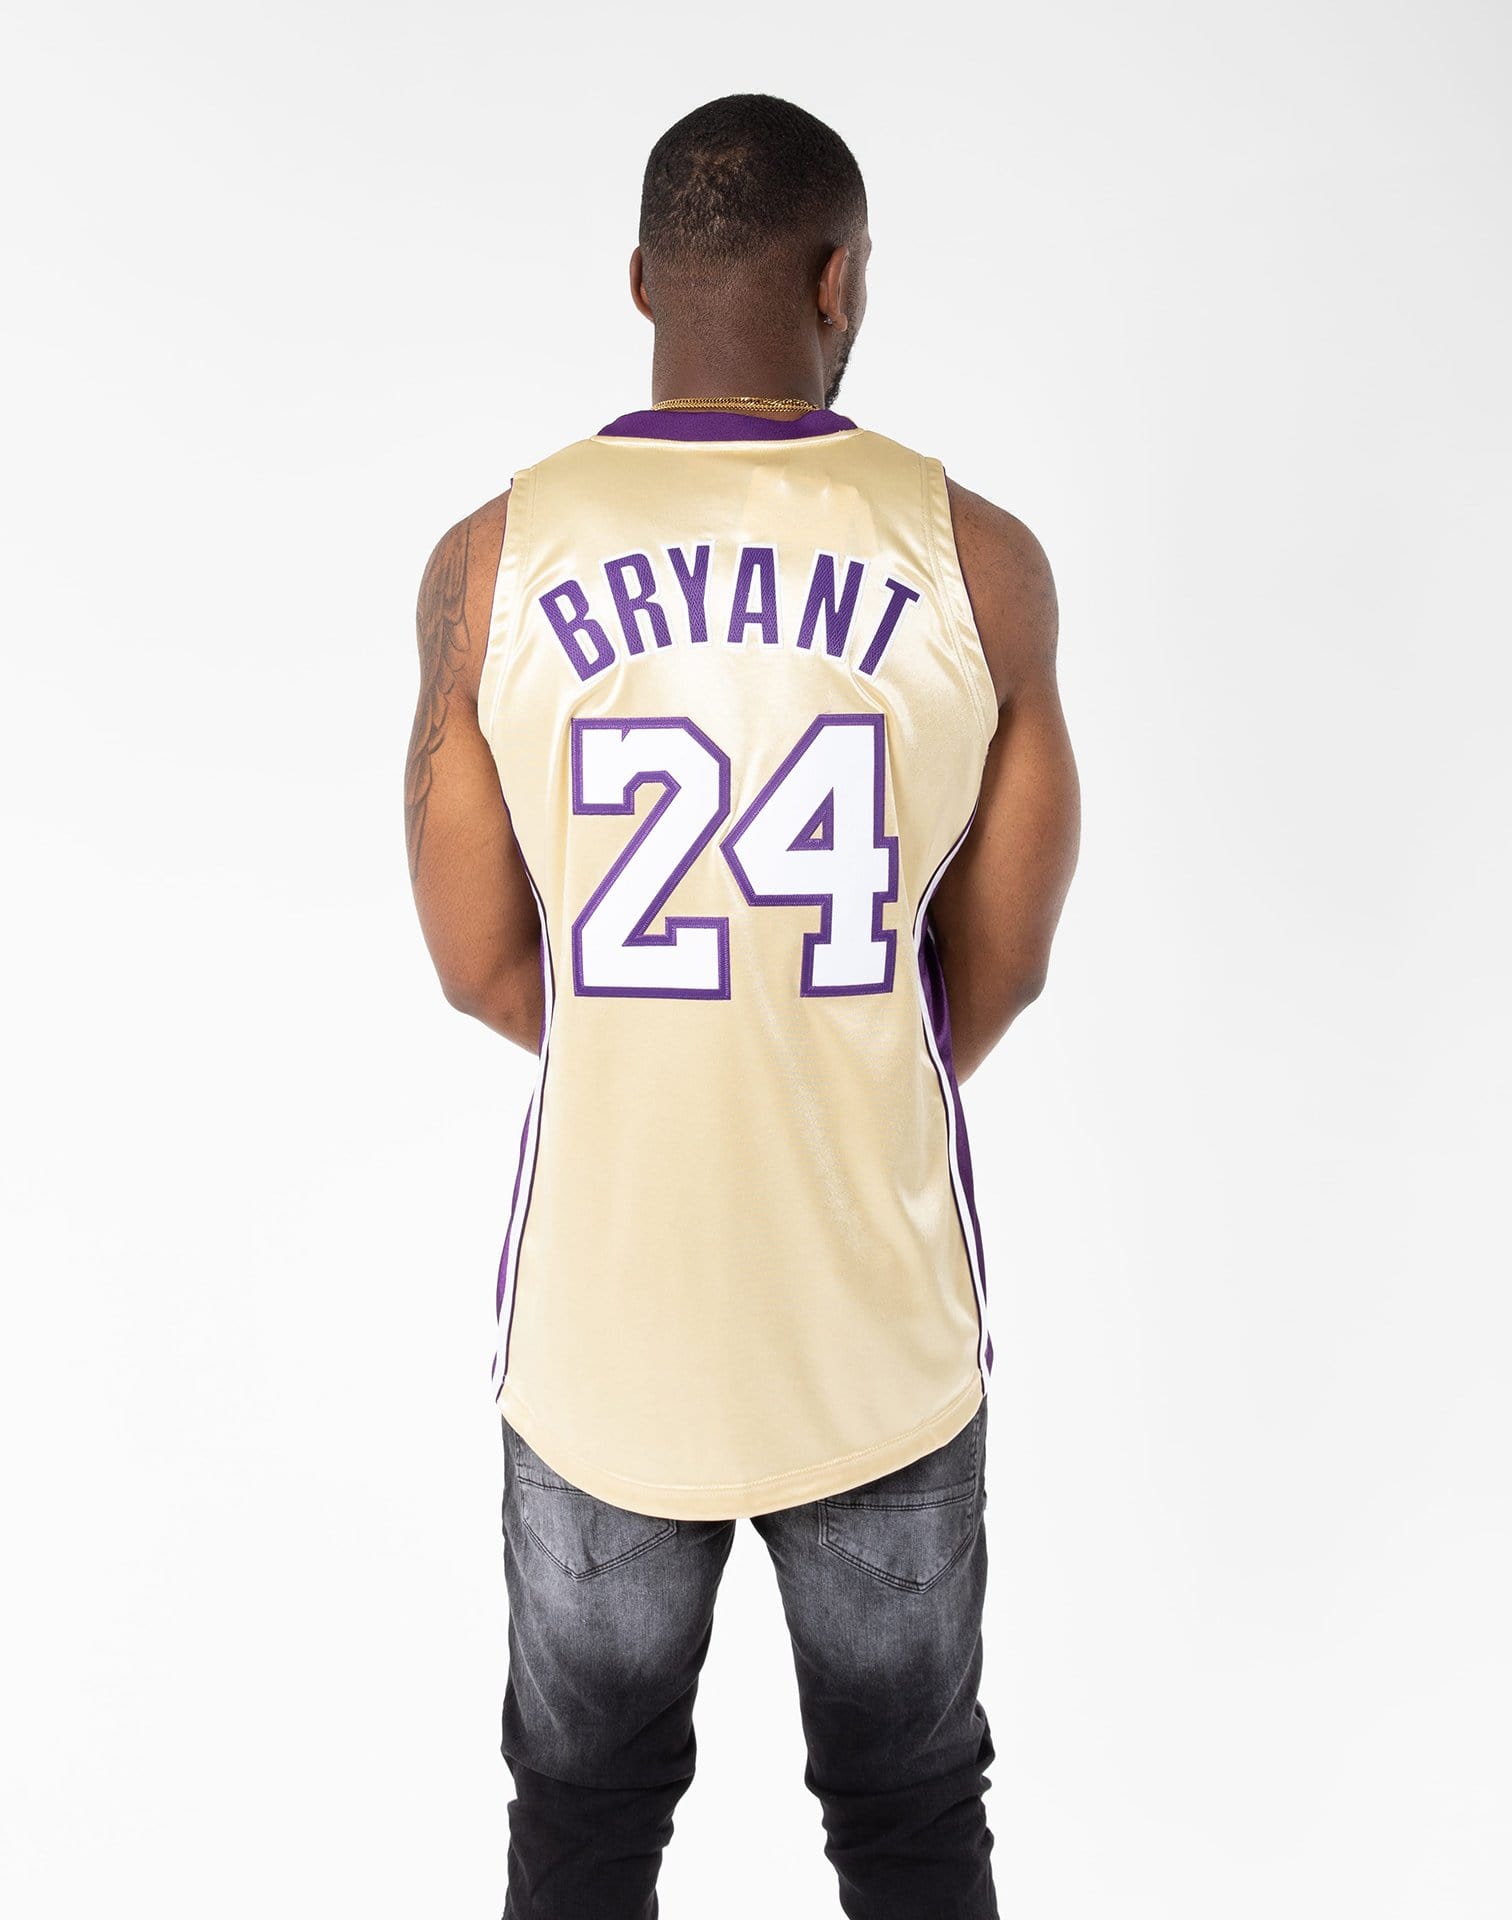 Kobe Bryant Los Angeles Lakers 24 Jersey – Nonstop Jersey